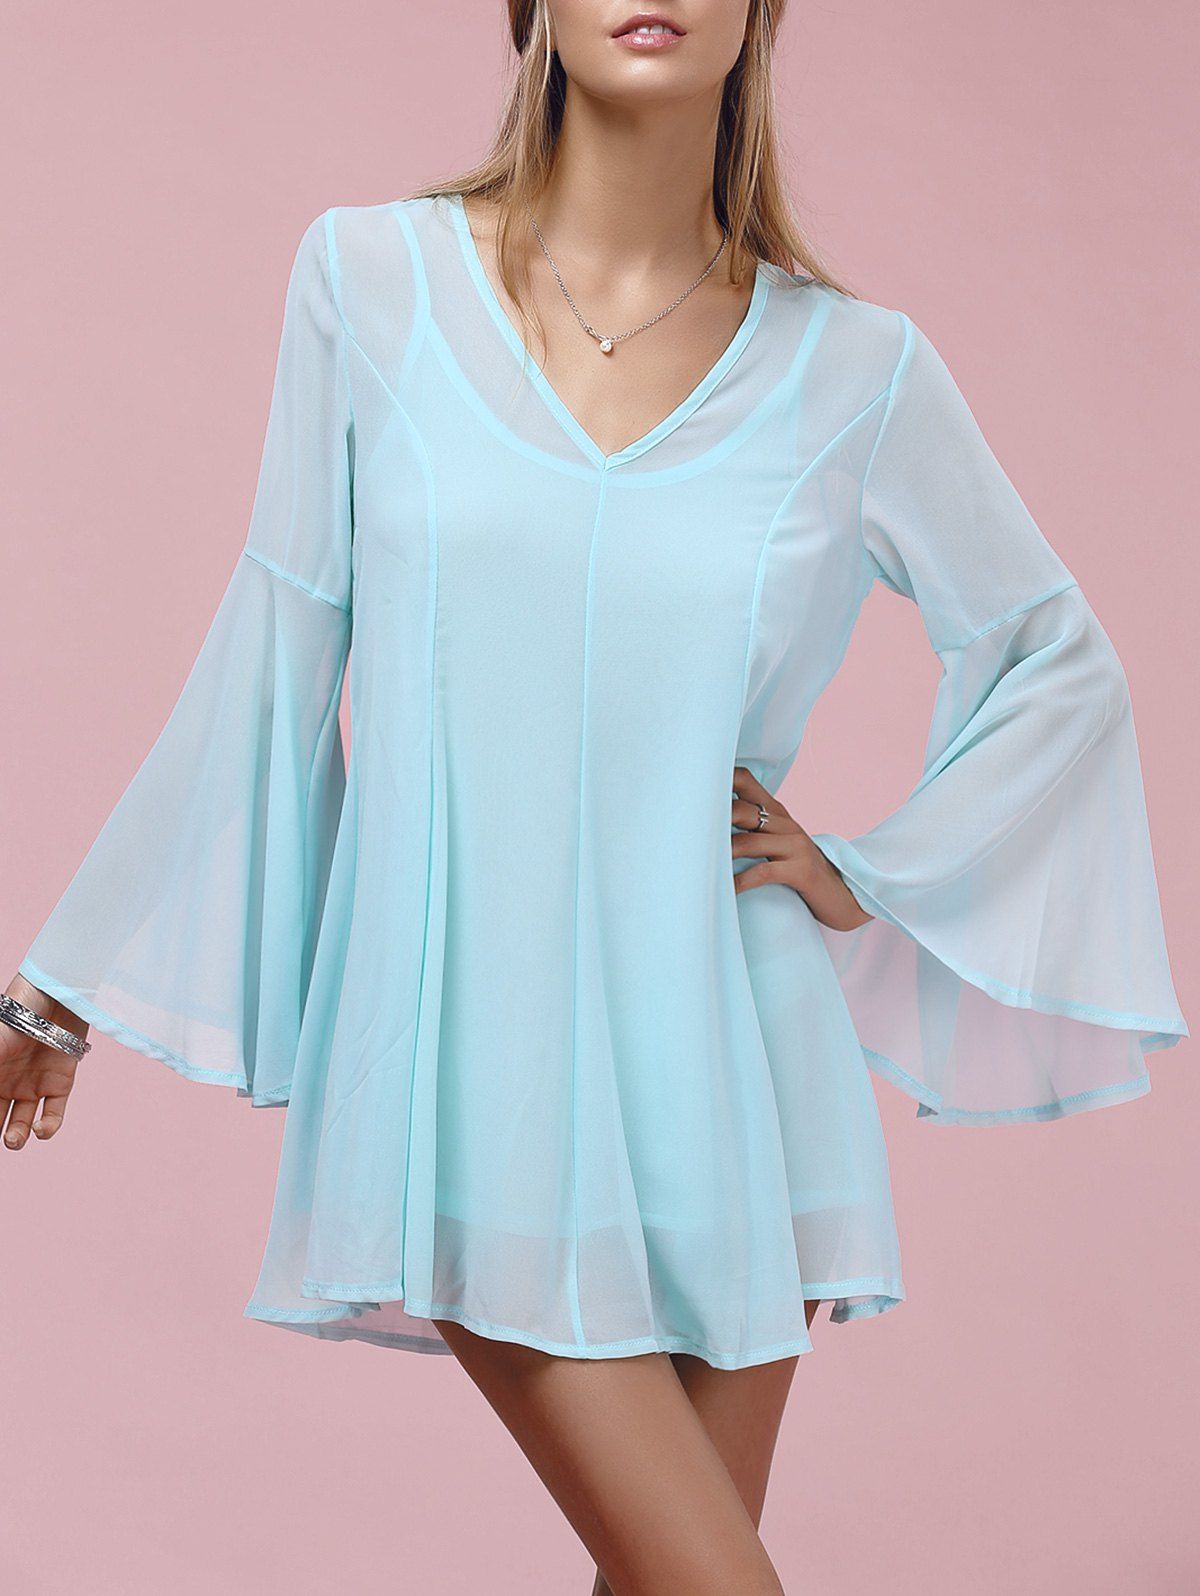 Blue Xl Stylish V Neck Bell Sleeve Chiffon Dress Twinset For Women